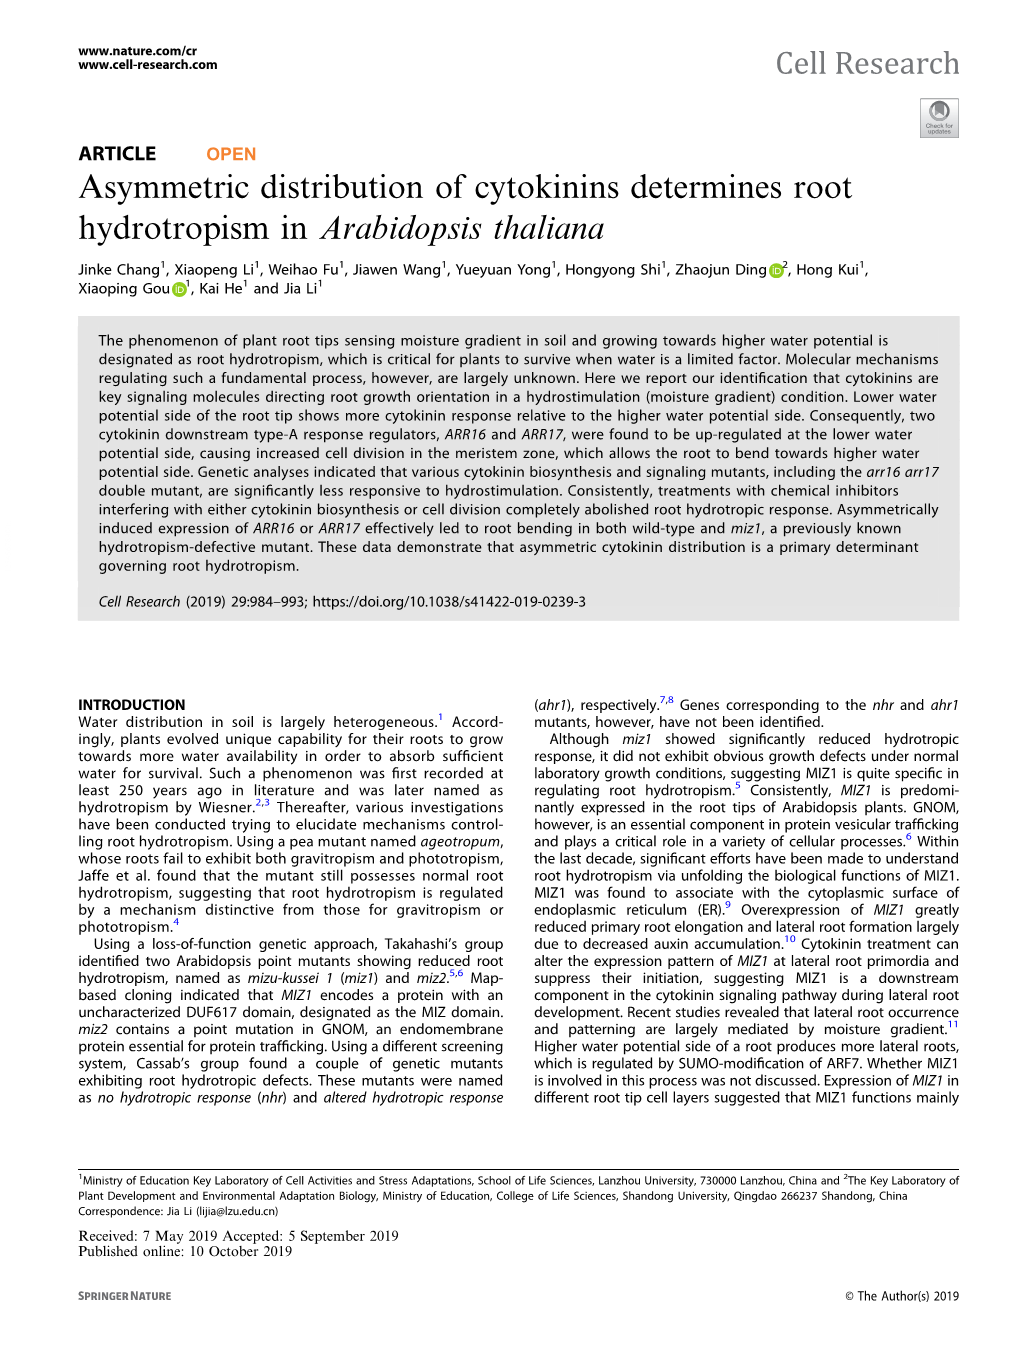 Asymmetric Distribution of Cytokinins Determines Root Hydrotropism in Arabidopsis Thaliana